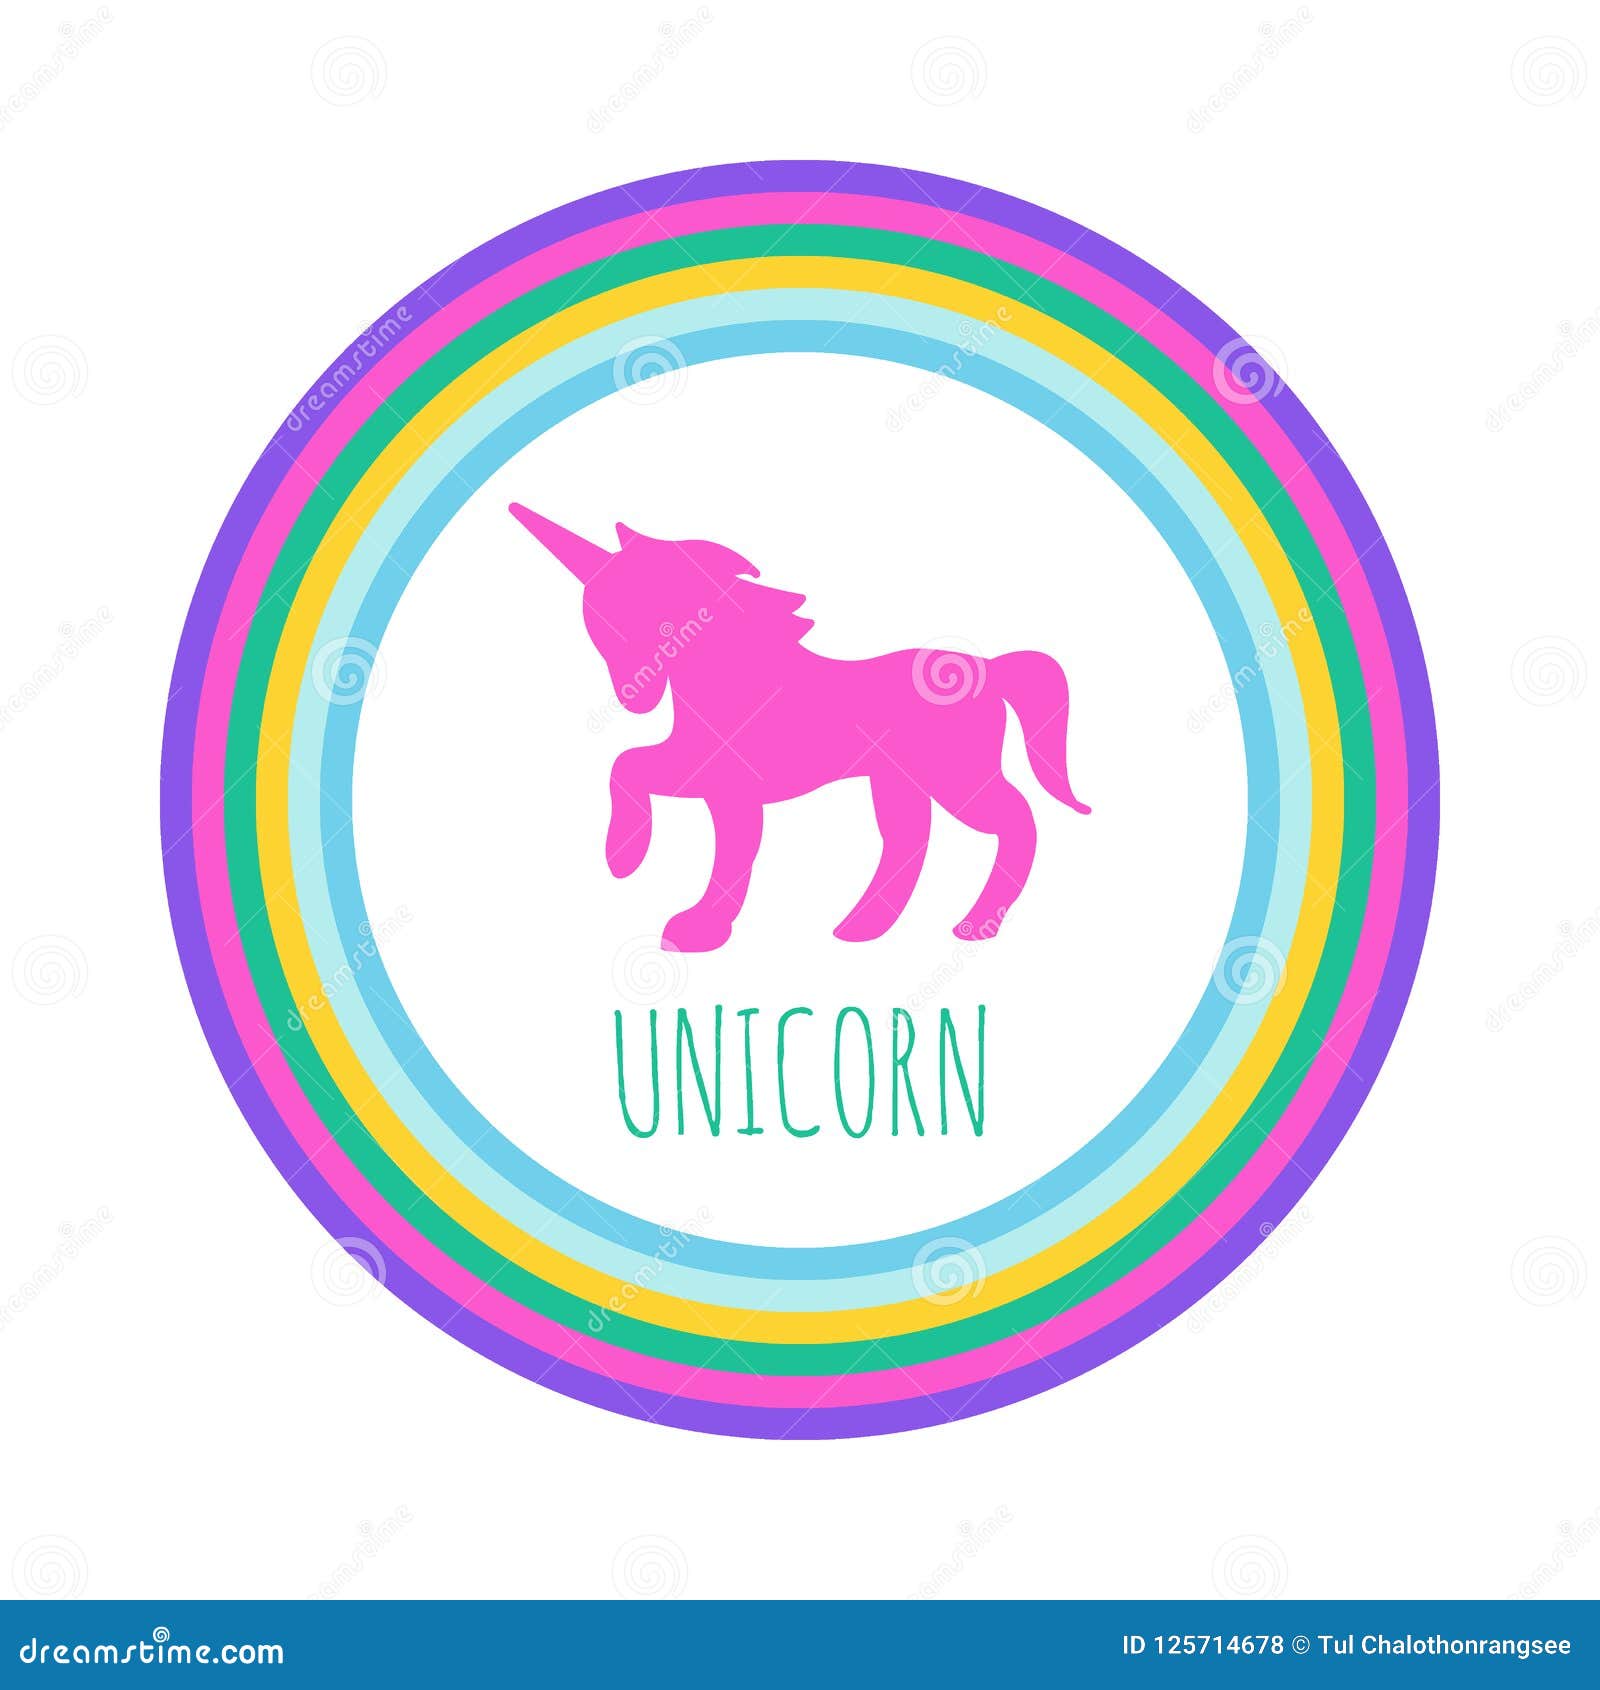 Unicorn logo 1 stock vector. Illustration of pink, abstract - 125714678